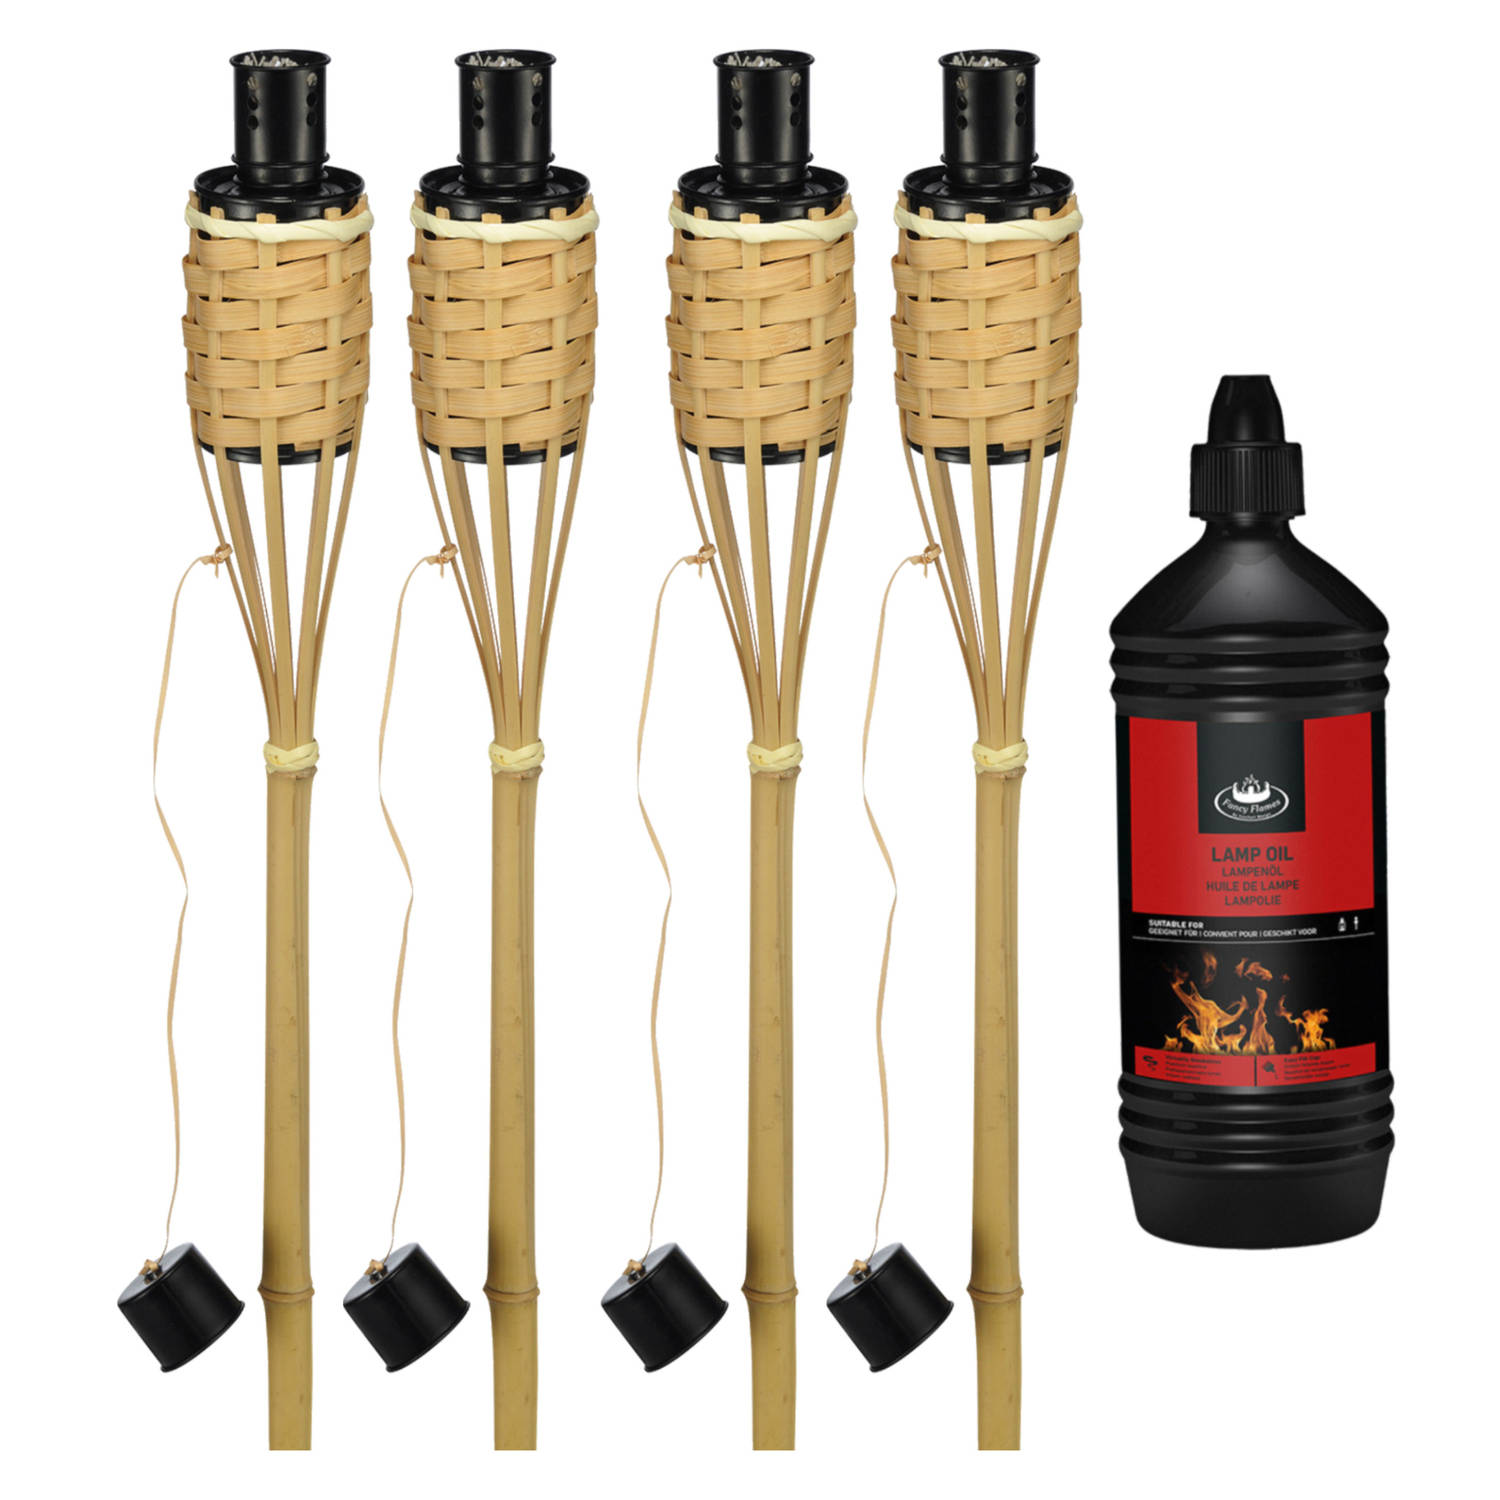 4x Bamboe tuinfakkels 60 cm inclusief 1 liter lampenolie/fakkelolie - Fakkels